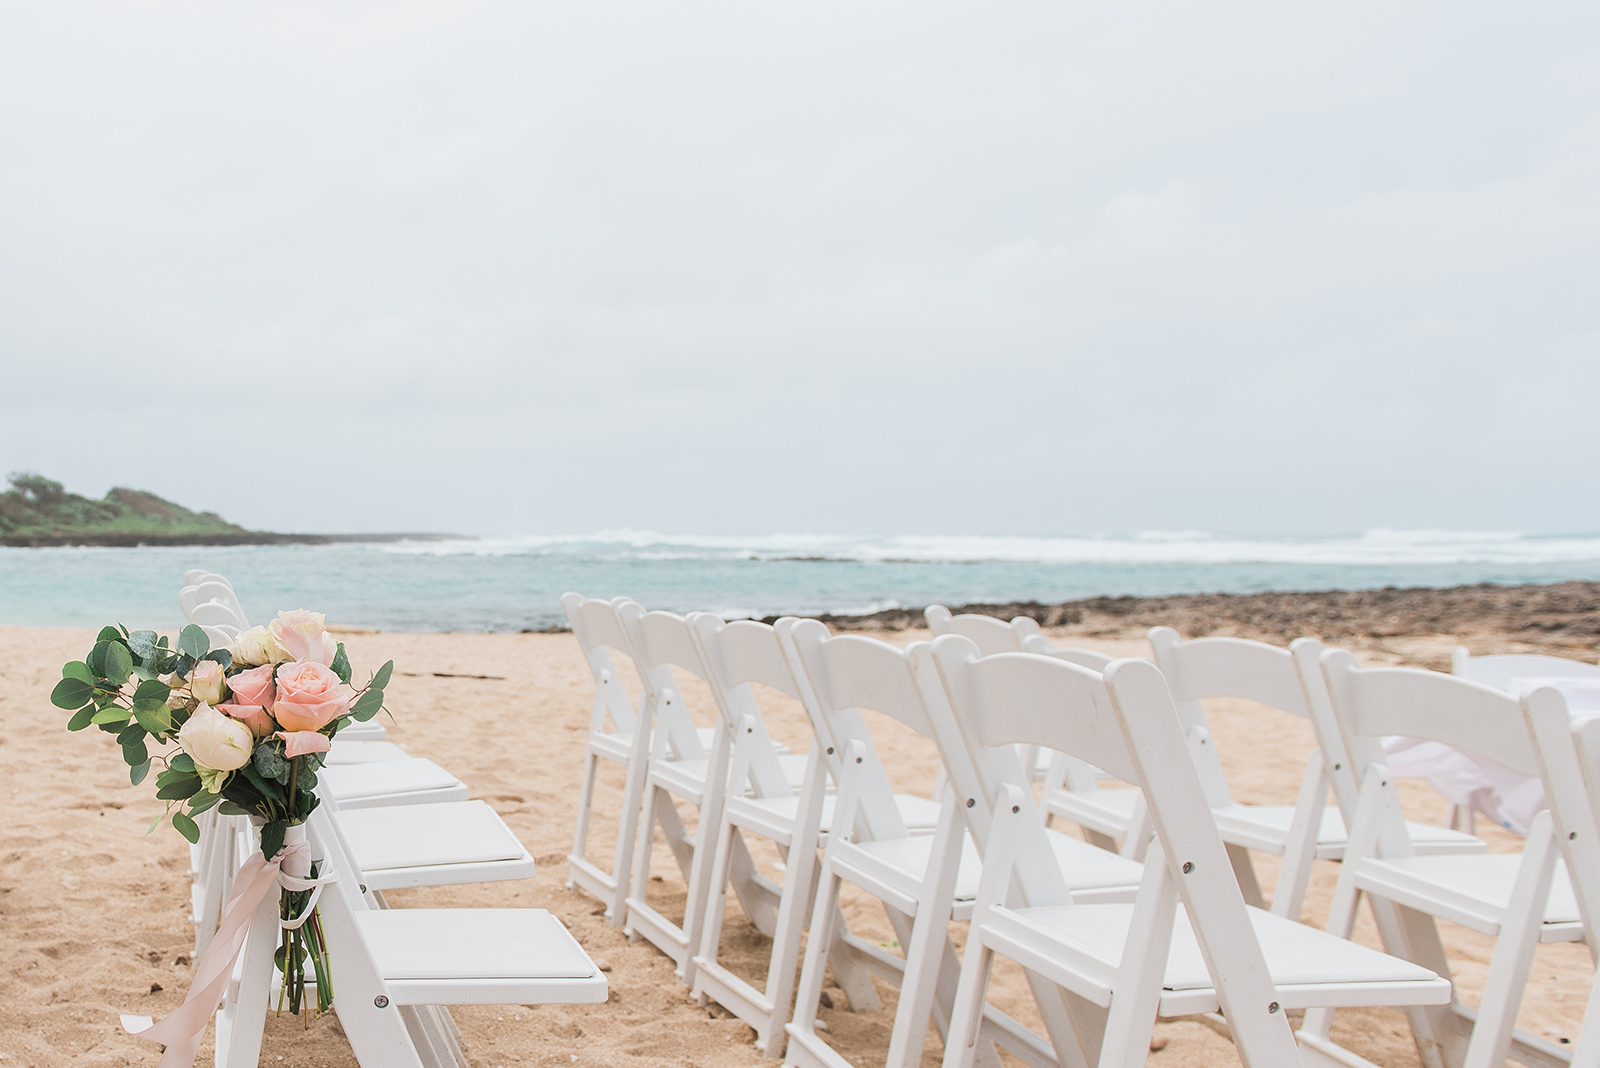 A Turtle Bay Resort Oahu Beach Wedding - The Overwhelmed Bride Wedding Blog